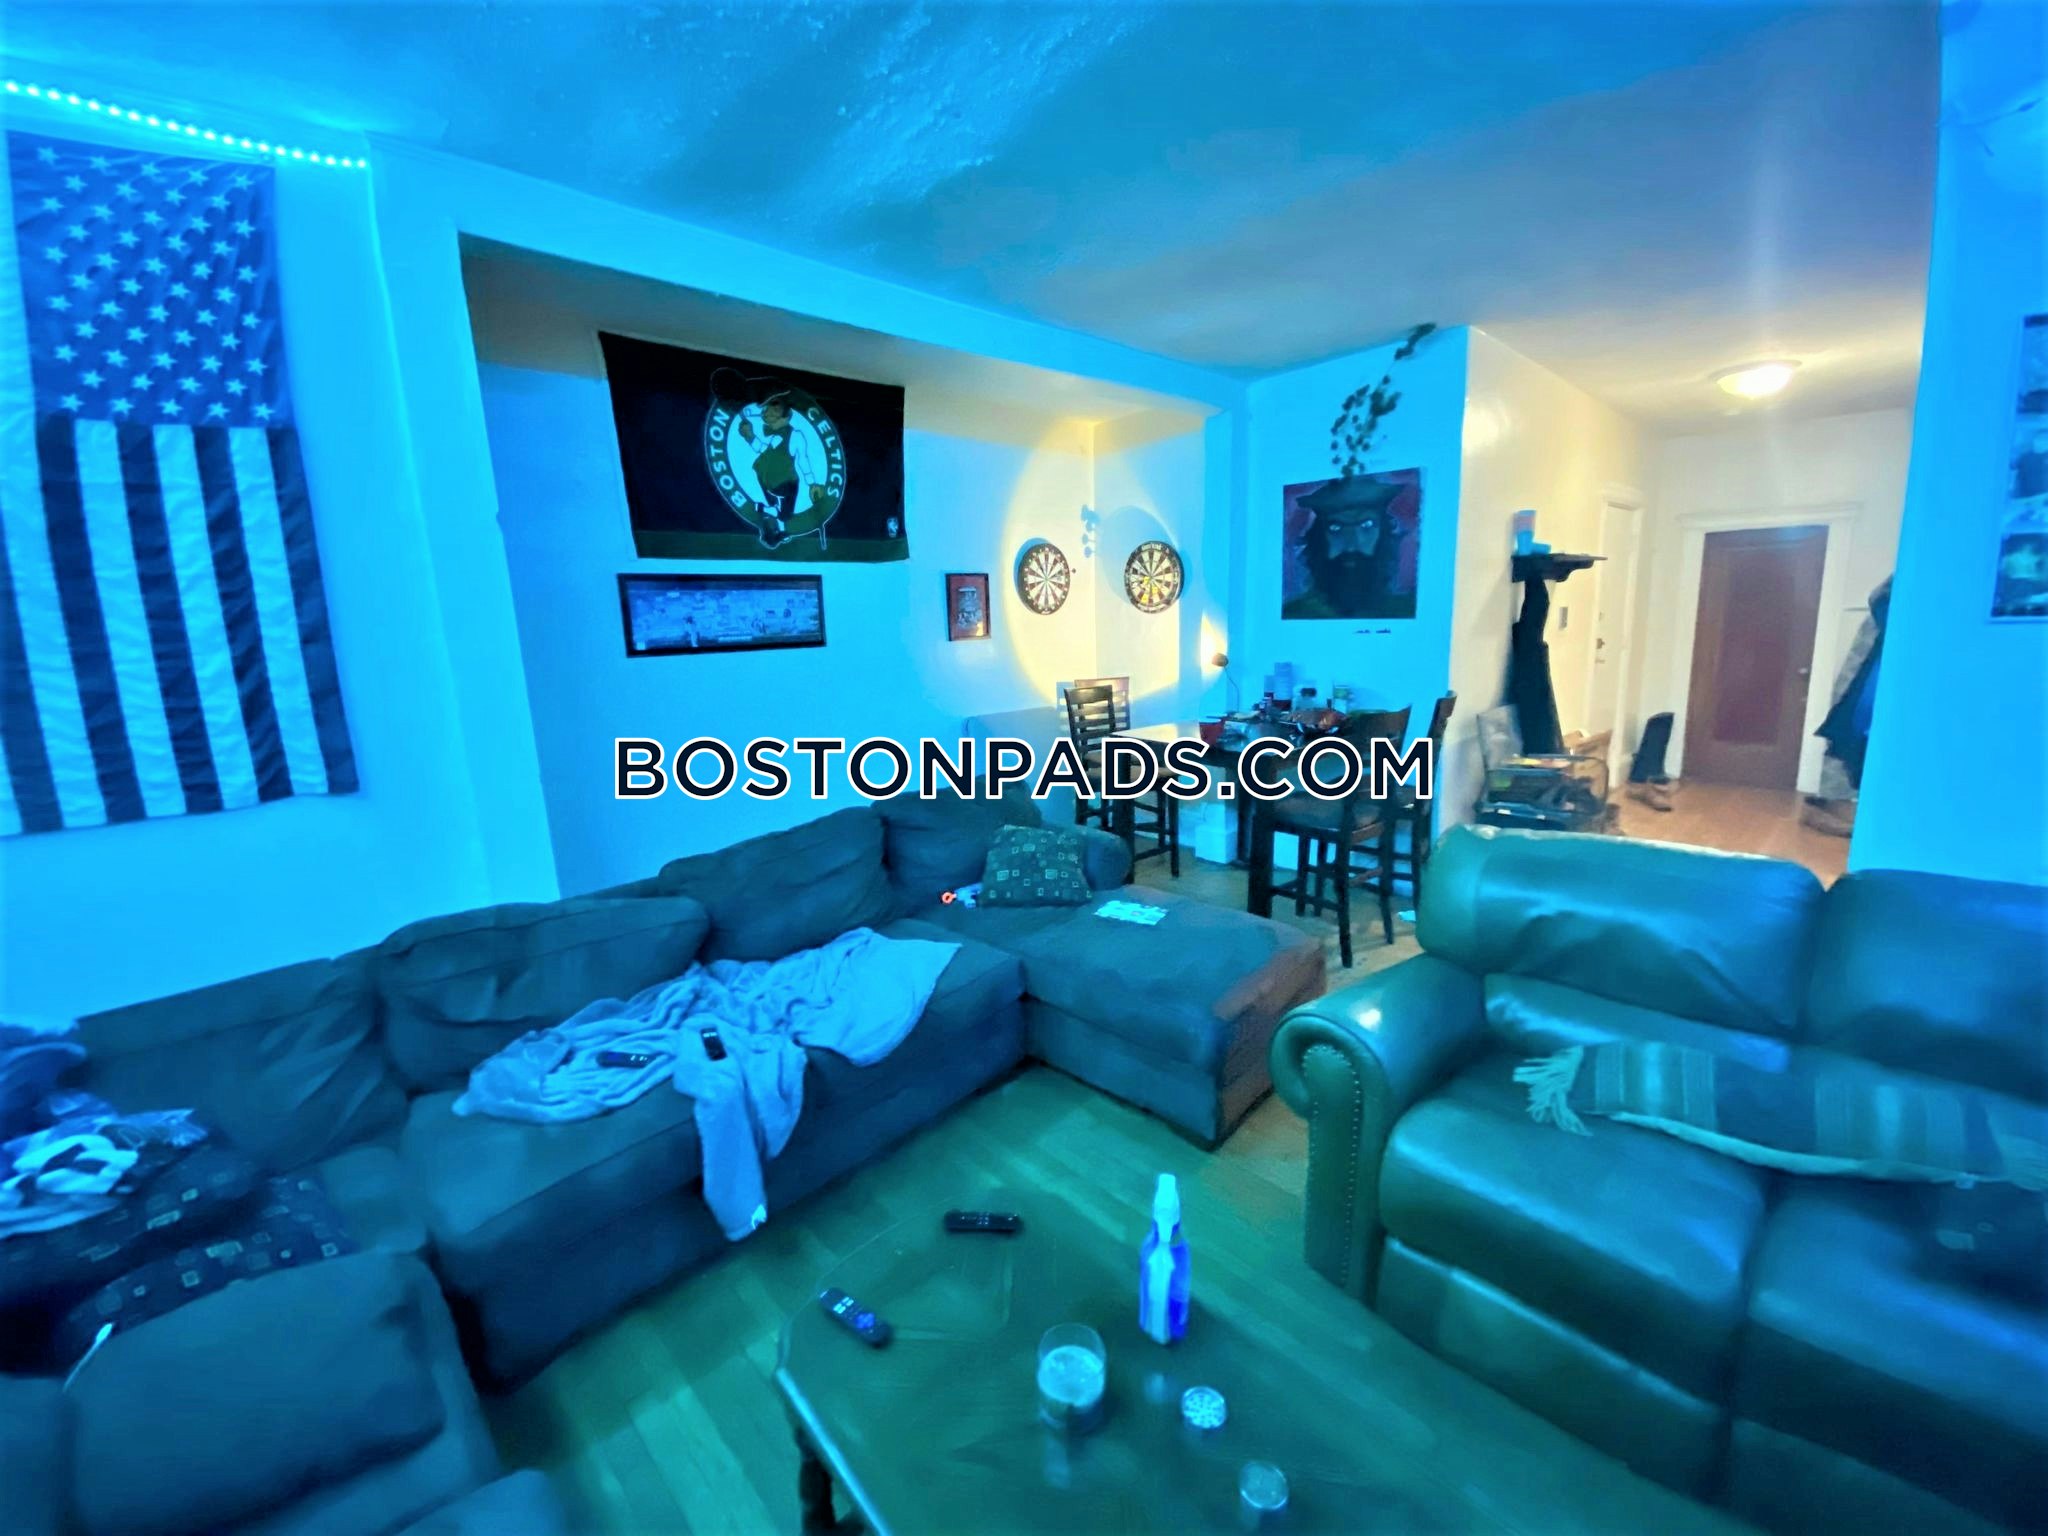 Boston - $6,750